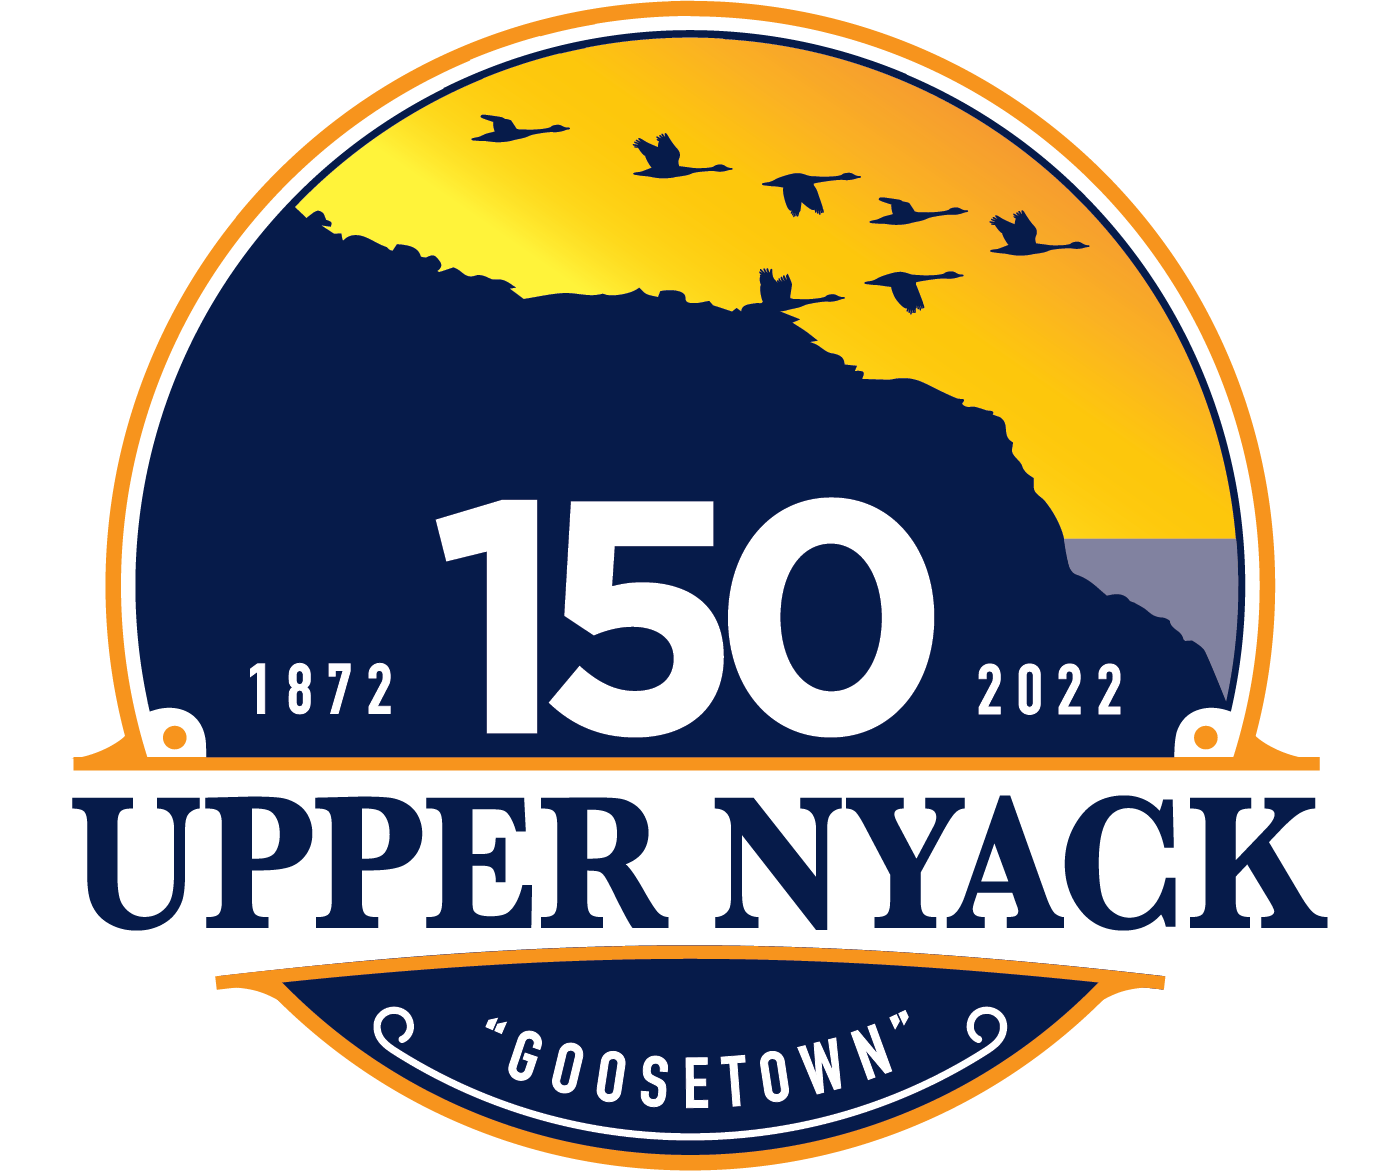 Upper Nyack History